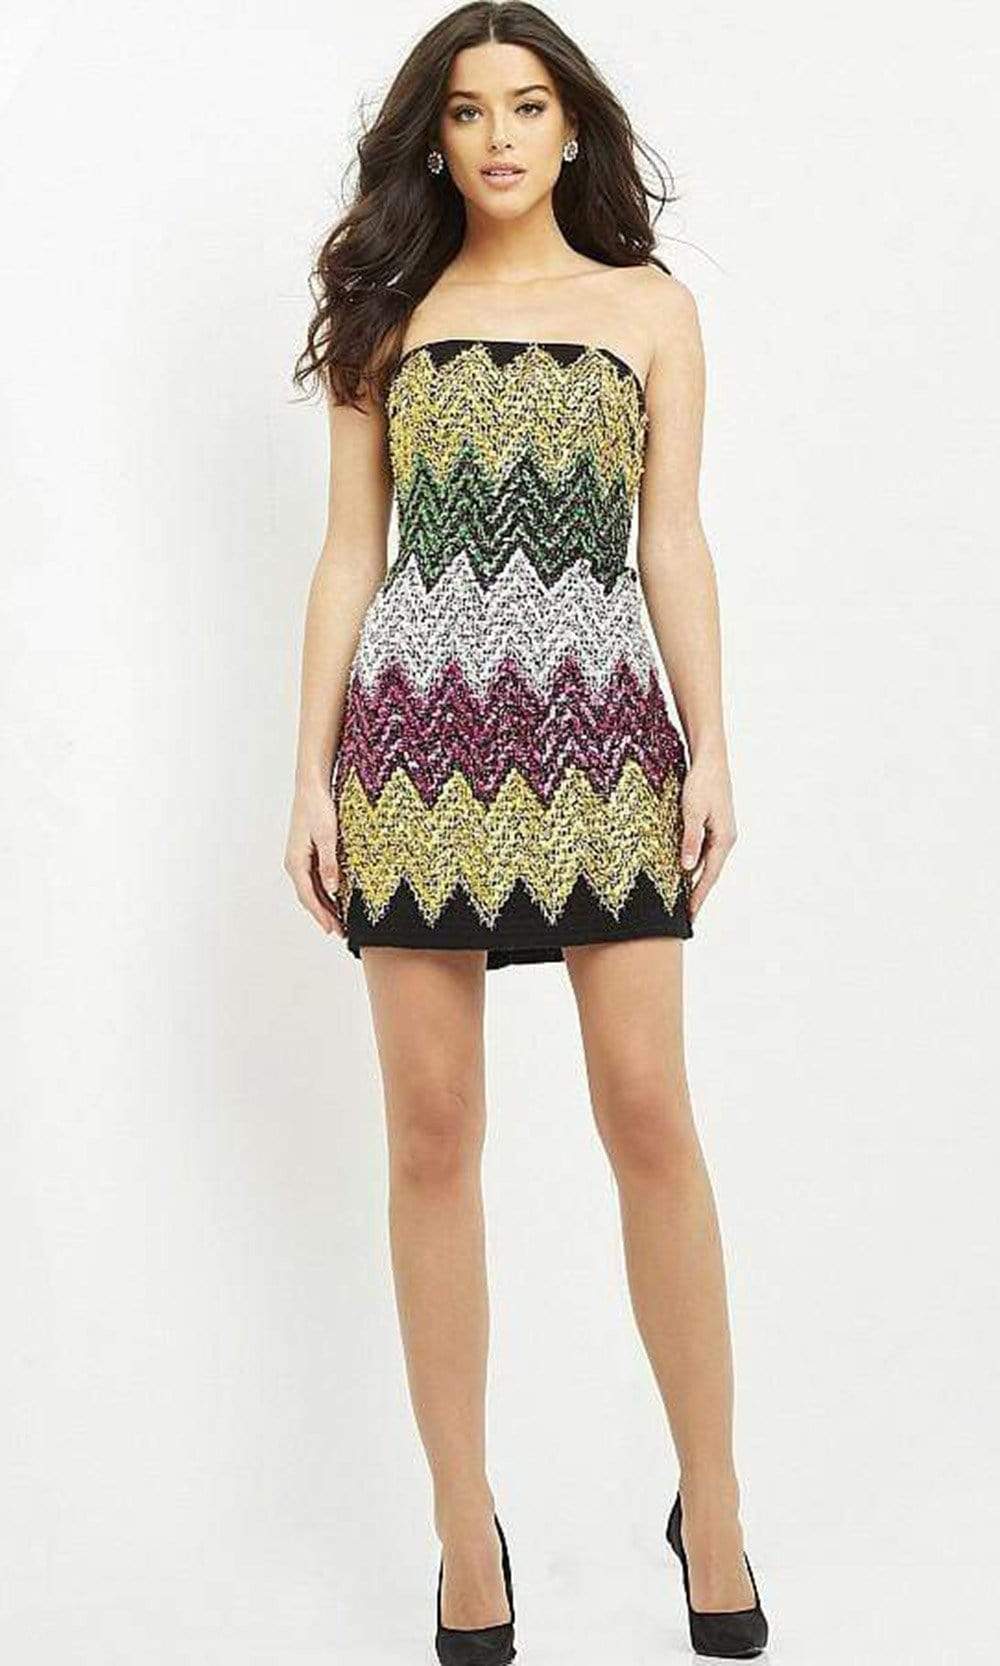 Jovani - M05036 Zigzag Embellished Colorful Dress
